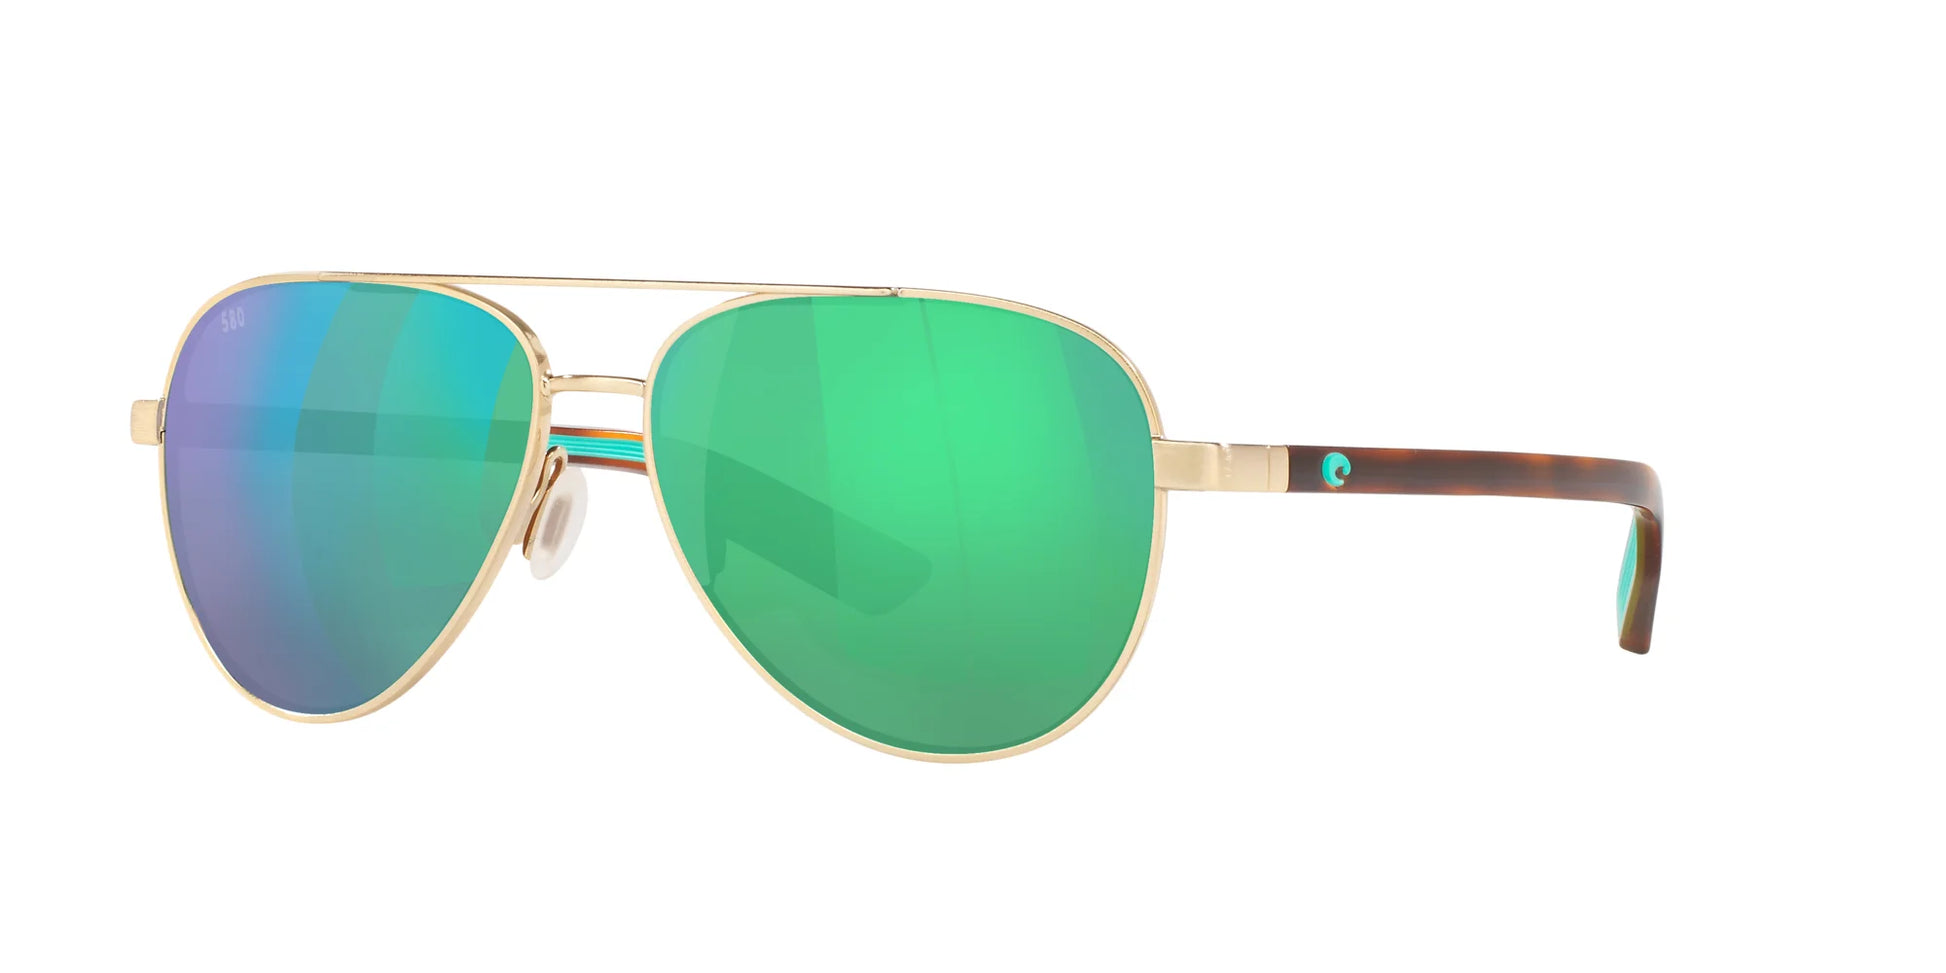 Costa PELI 6S4002 Sunglasses Brushed Gold / Green Mirror